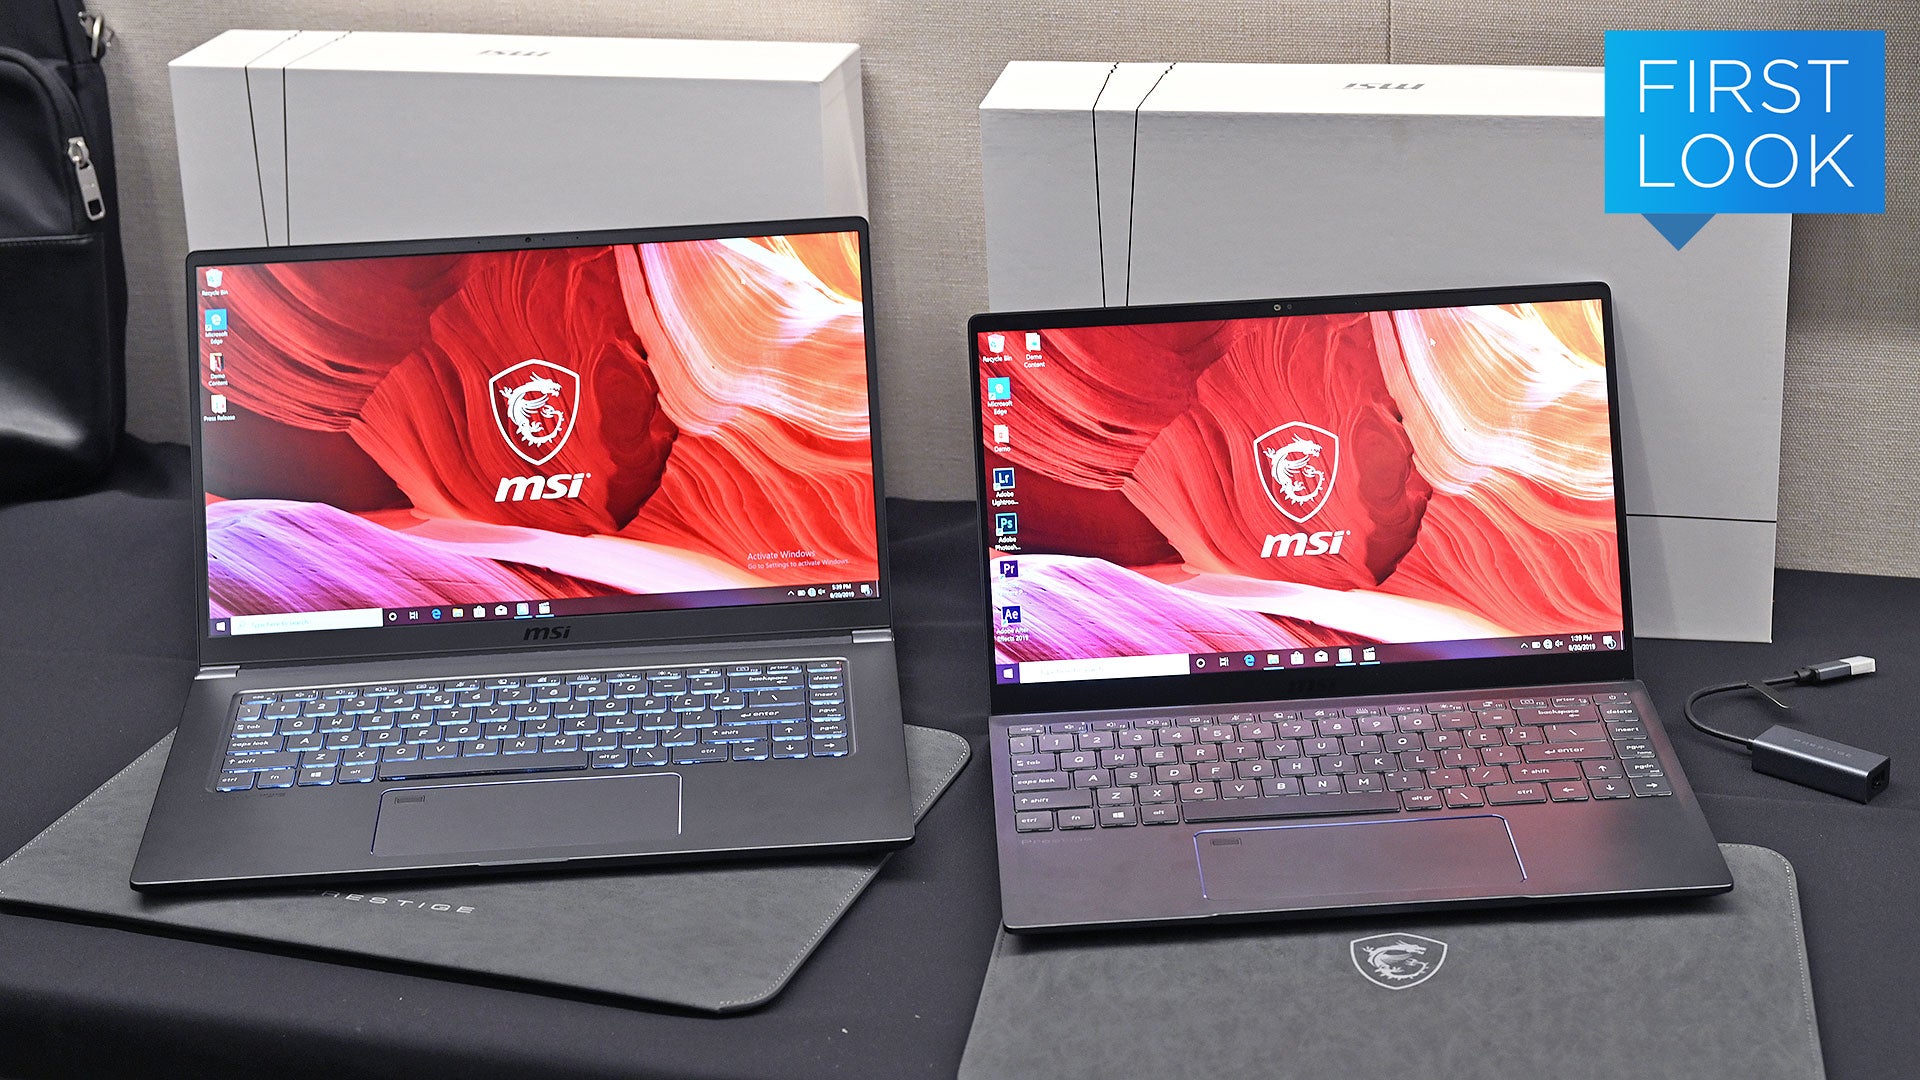 MSI’s Prestige Laptops Bring Big Gaming Performance To A Broader Audience